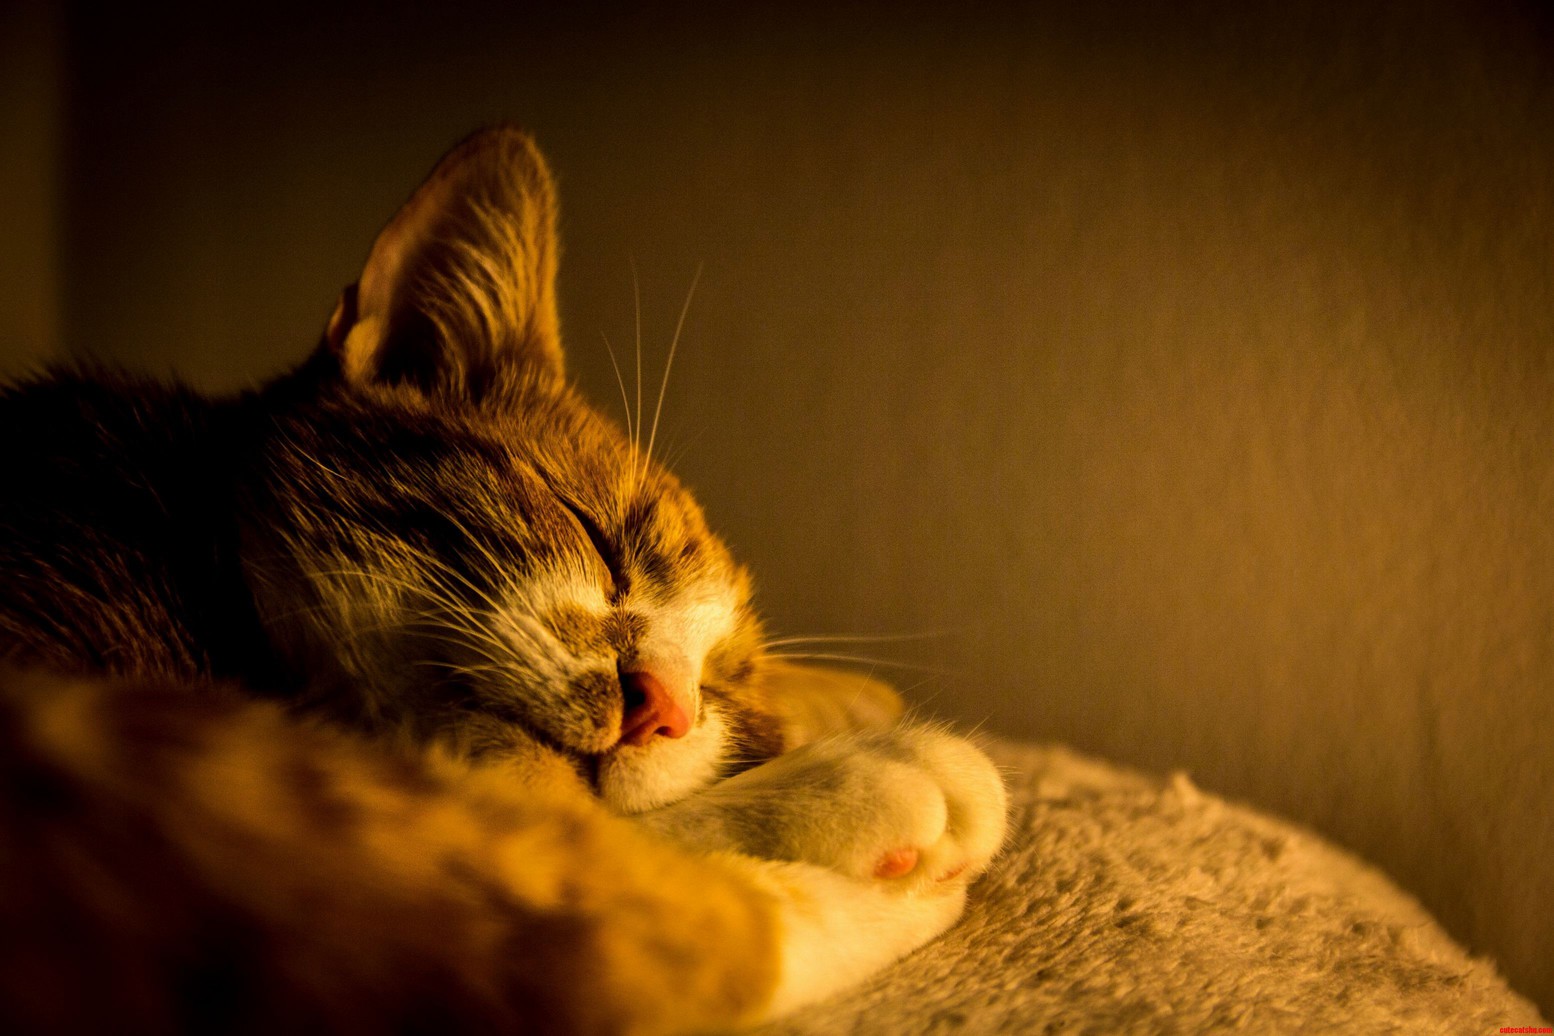 Happy kitty sleepy kitty purr purr purr